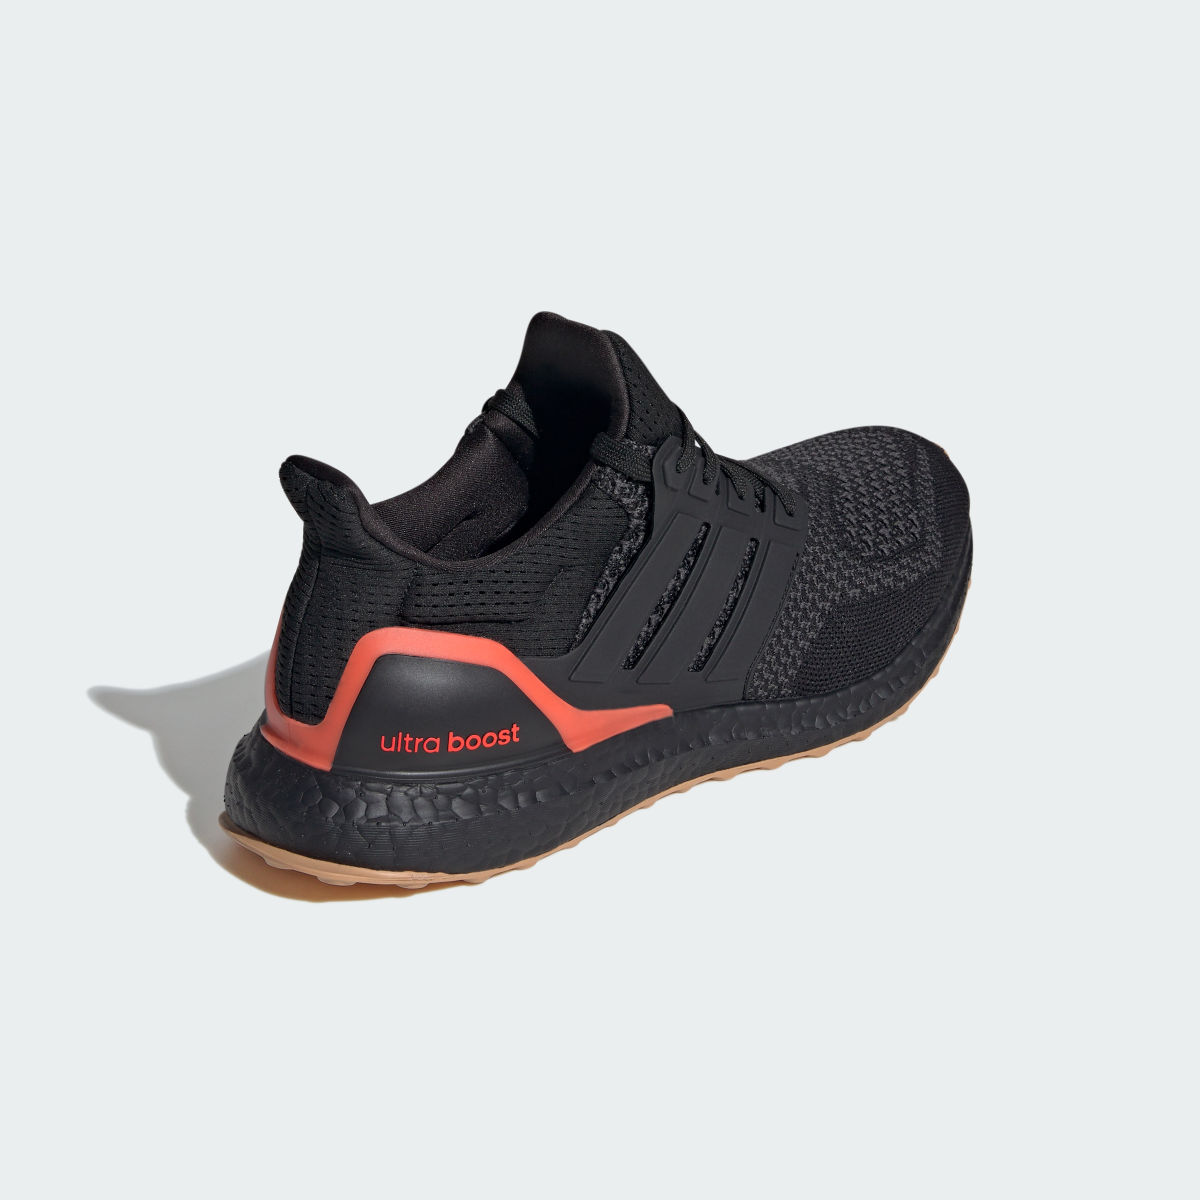 Adidas Ultraboost 1.0 Shoes. 6